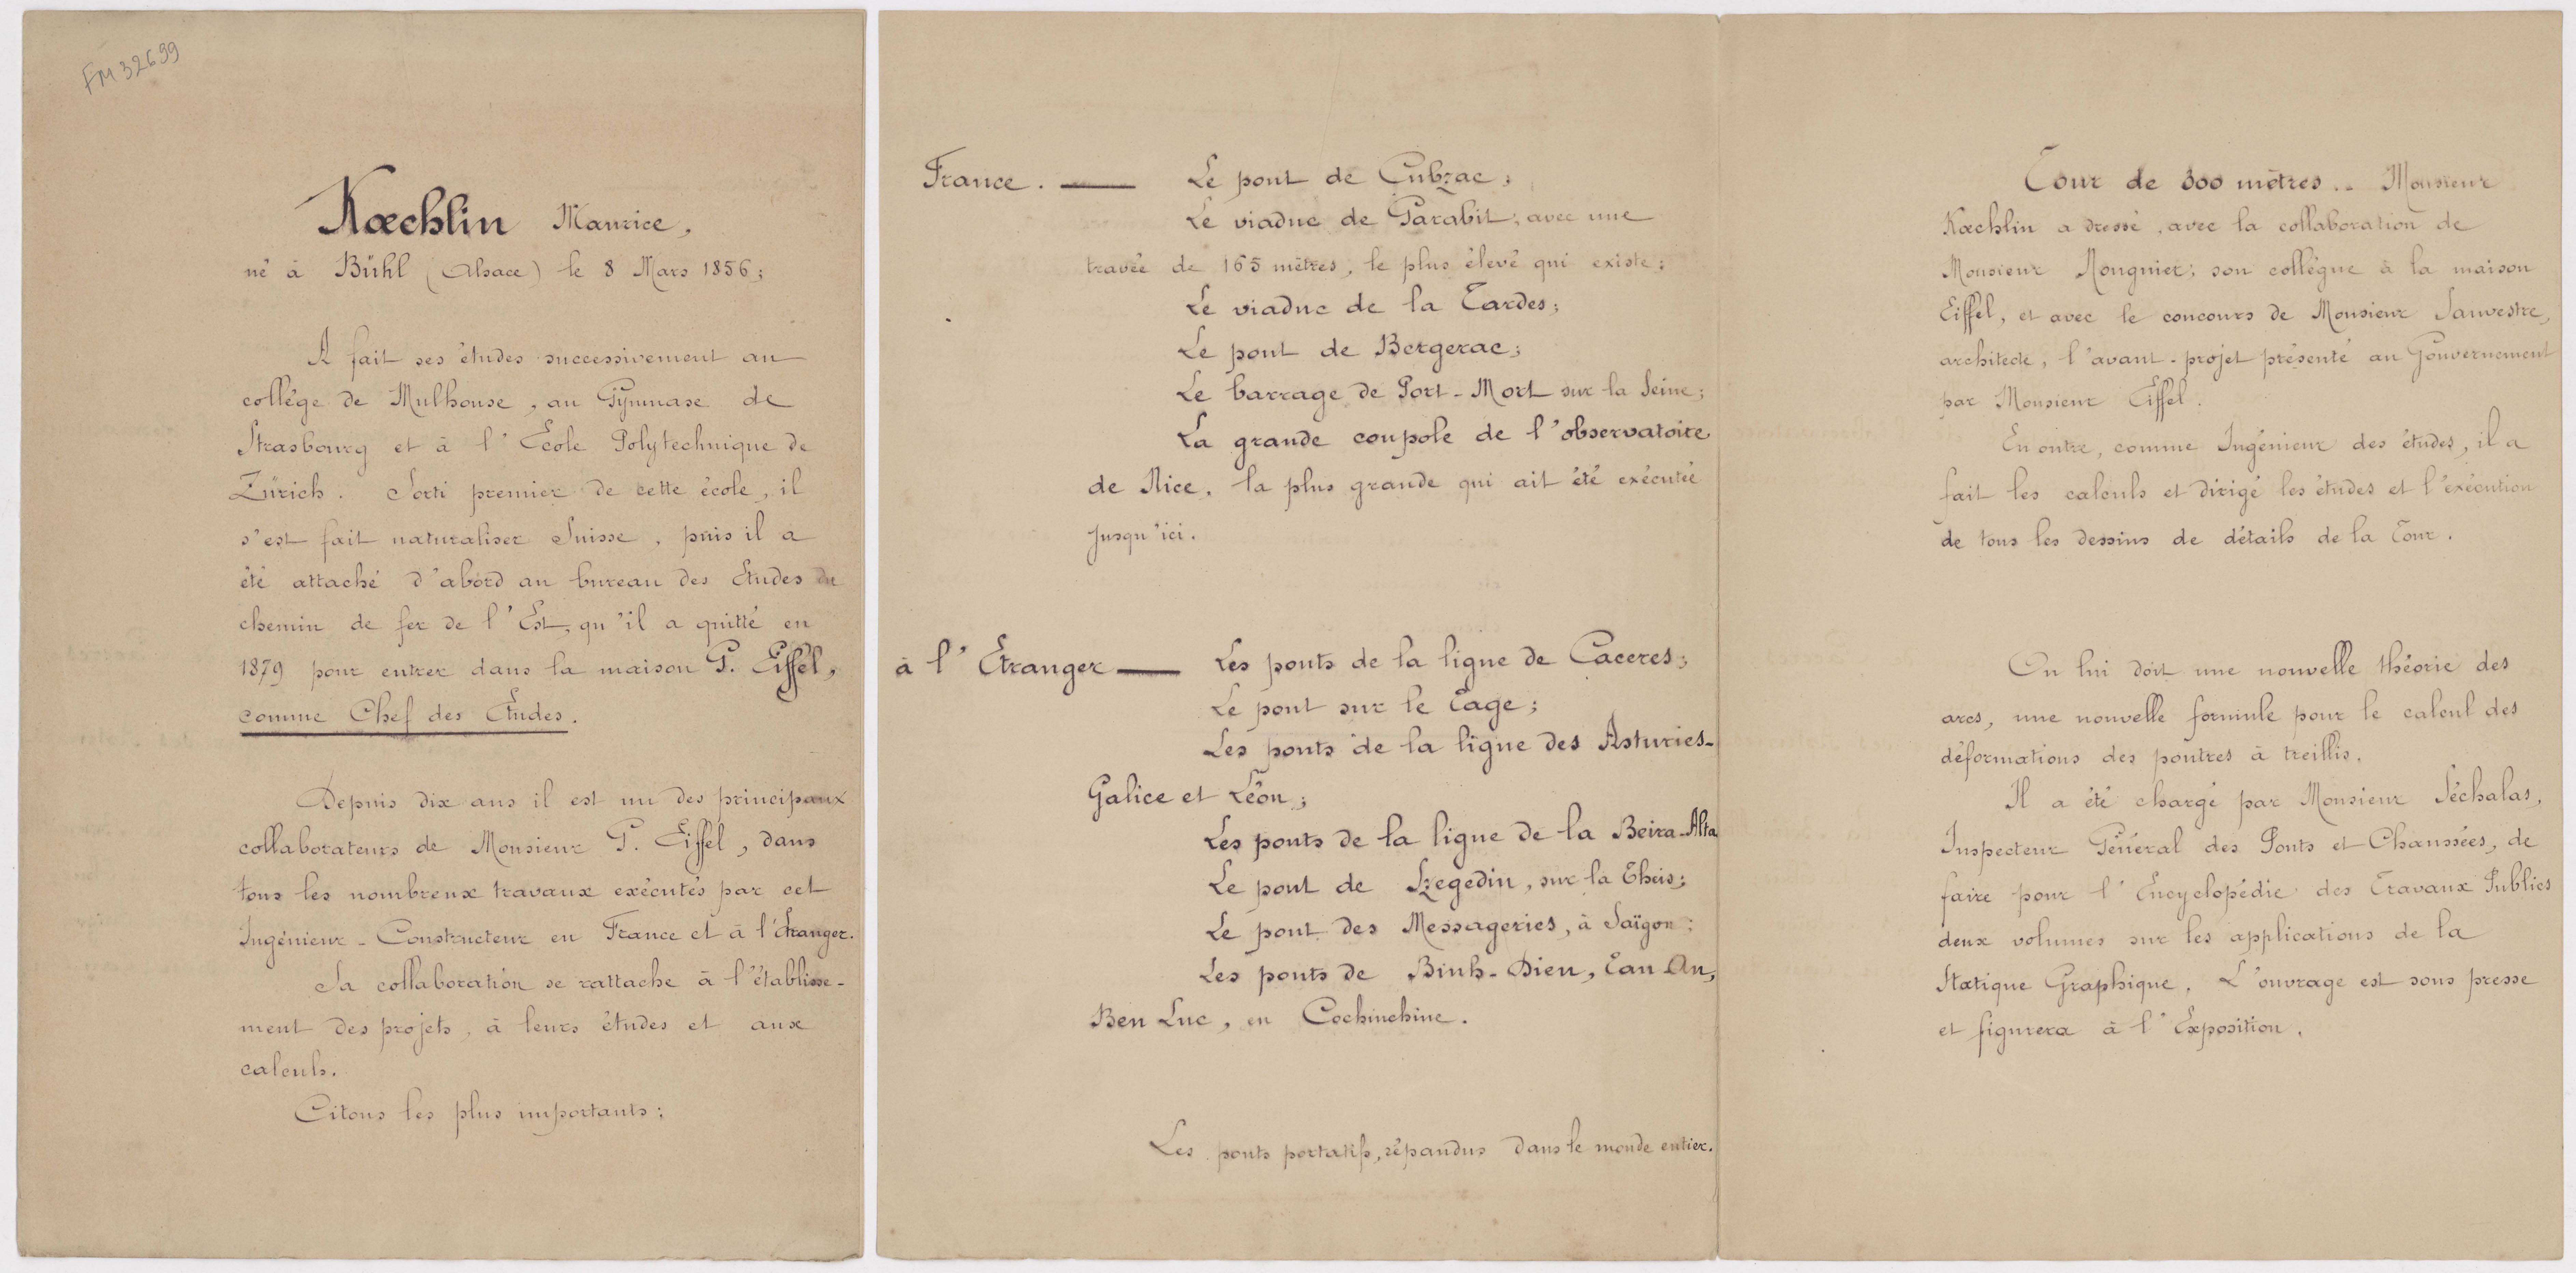 Curriculum vitae de Maurice Koechlin (1856-1946), collaborateur de Gustave Eiffel, et correspondance, 1879.